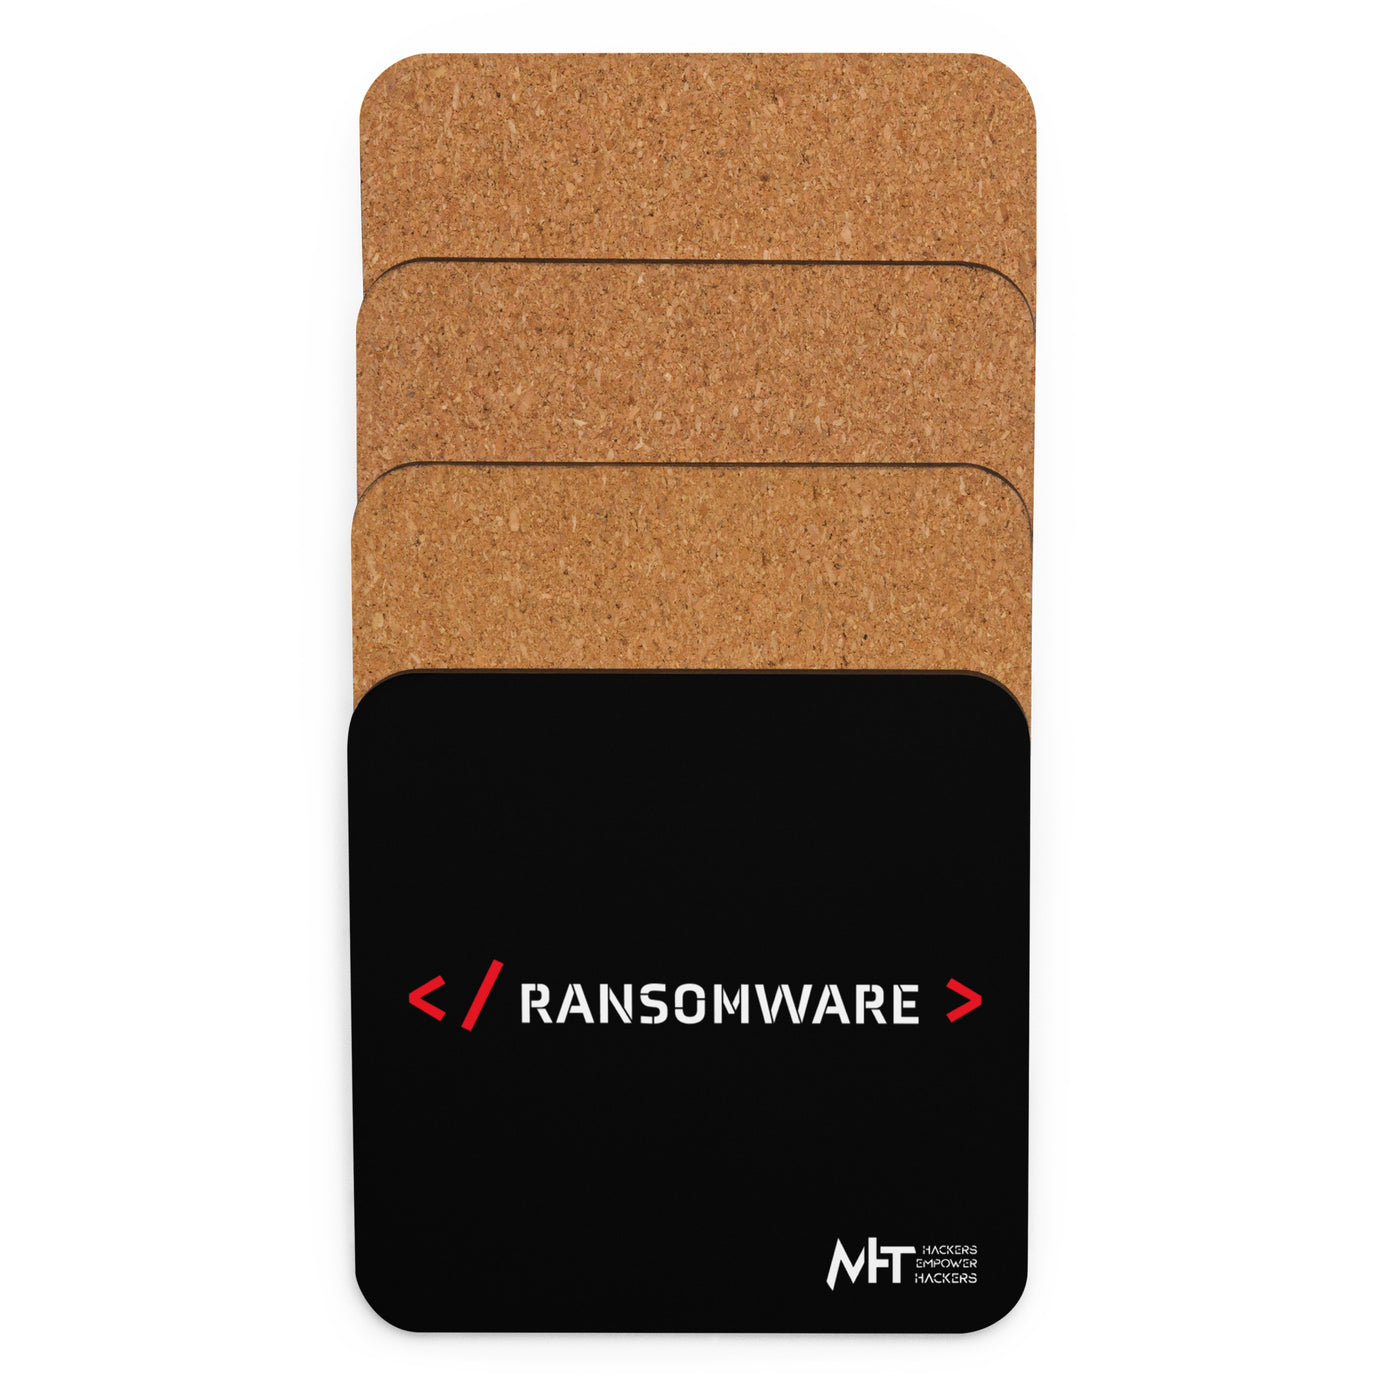 Ransomware - Cork-back coaster